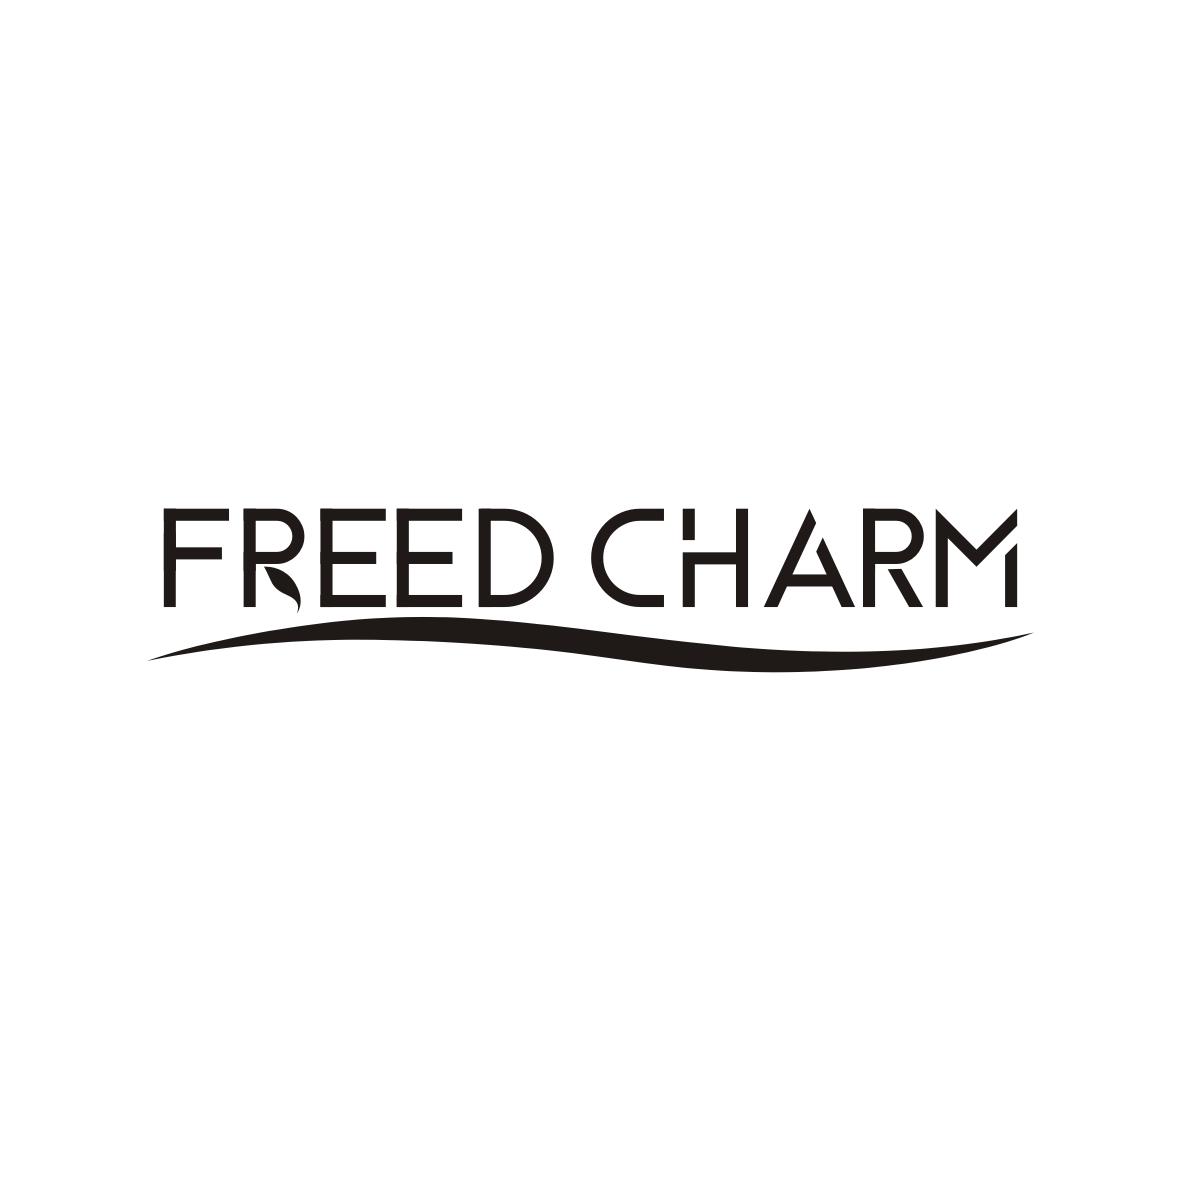 Freed Charm汽车清洗商标转让费用买卖交易流程